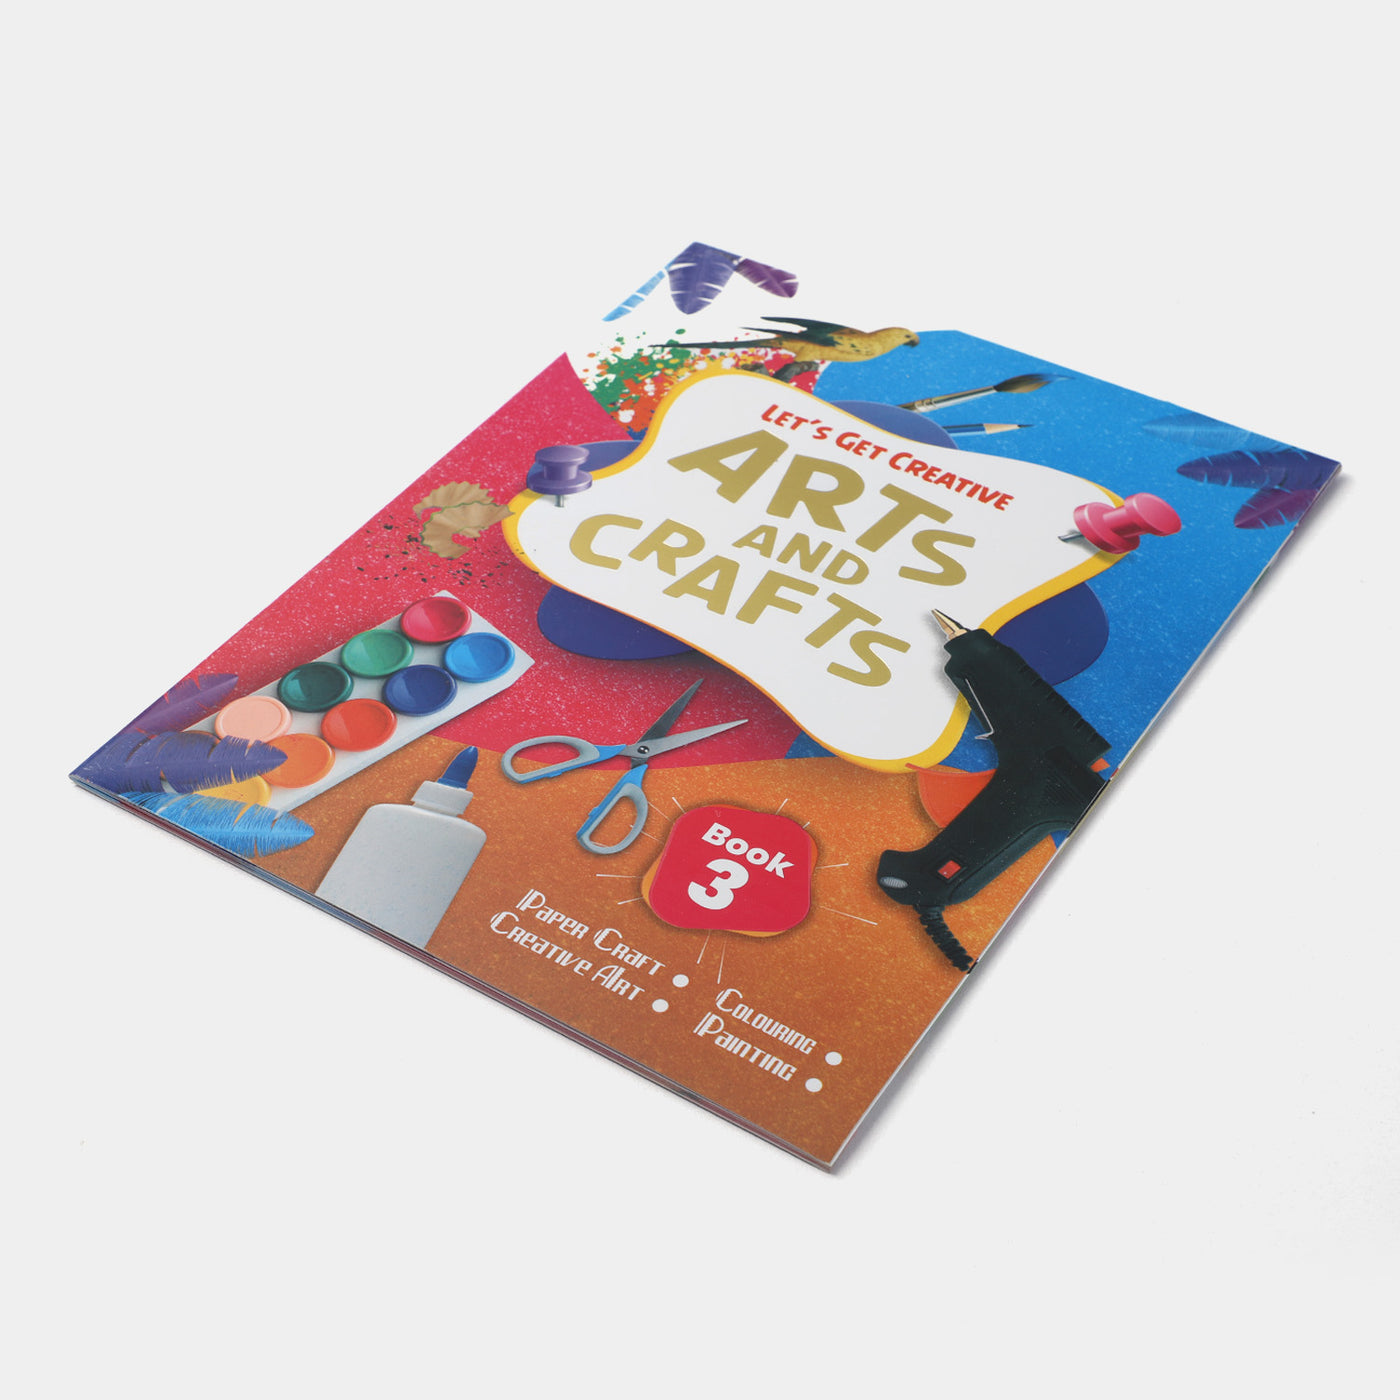 Art & Craft Activity Book For Kids